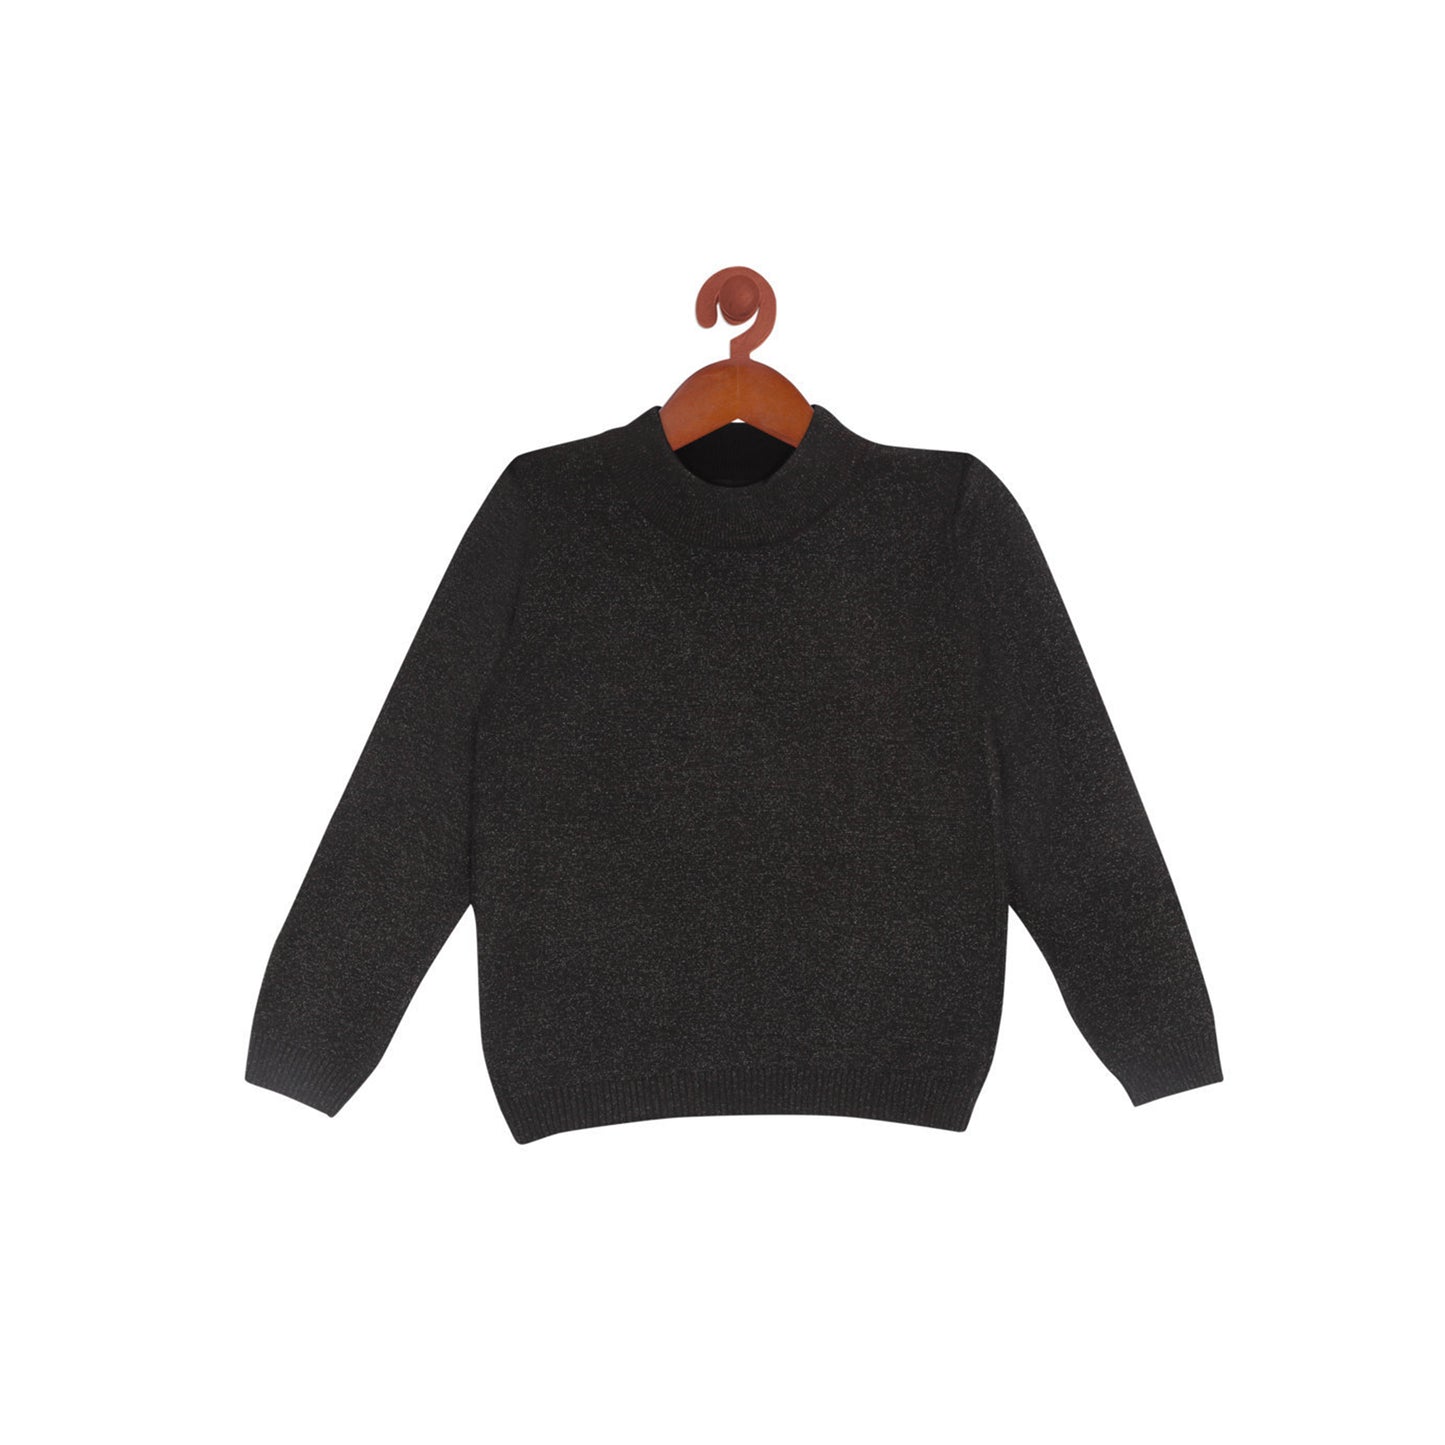 Basic Knitted Sikwi Black Sweater